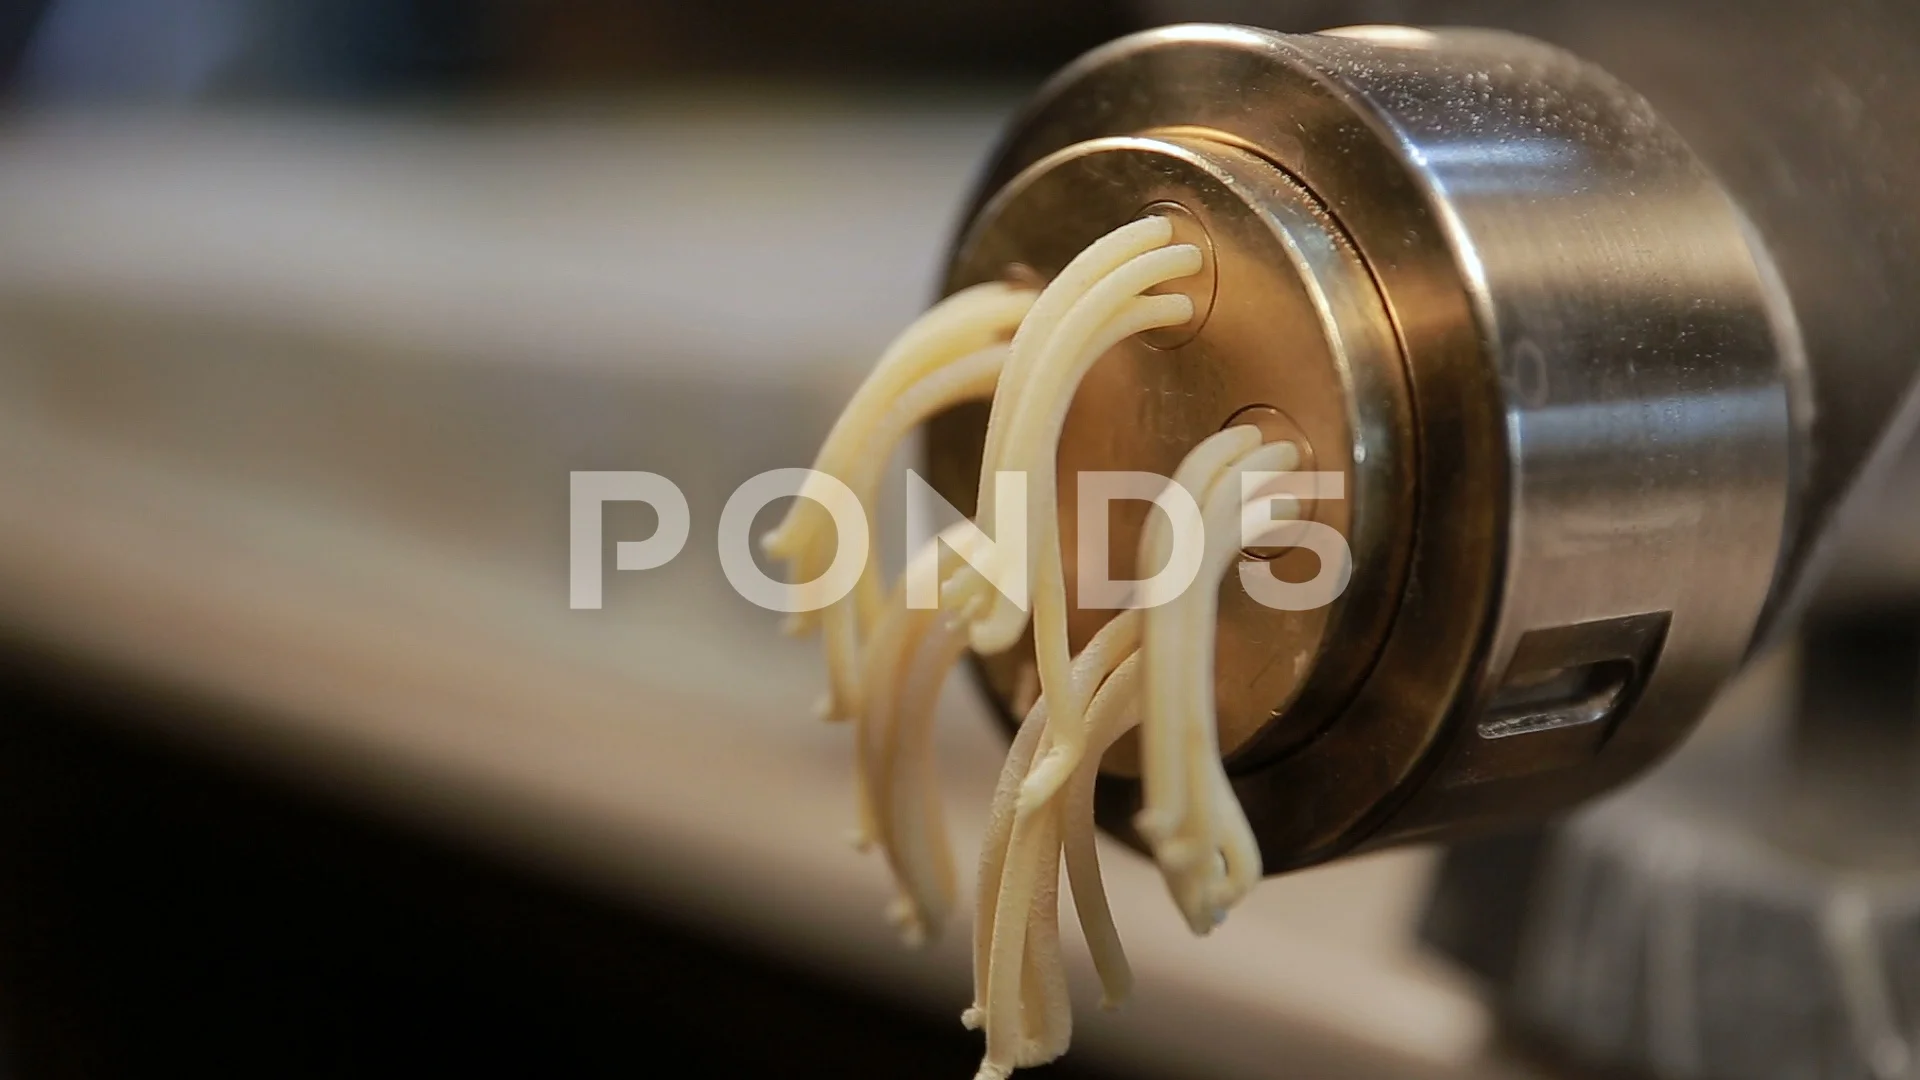 Production of spaghetti - machine produc, Stock Video